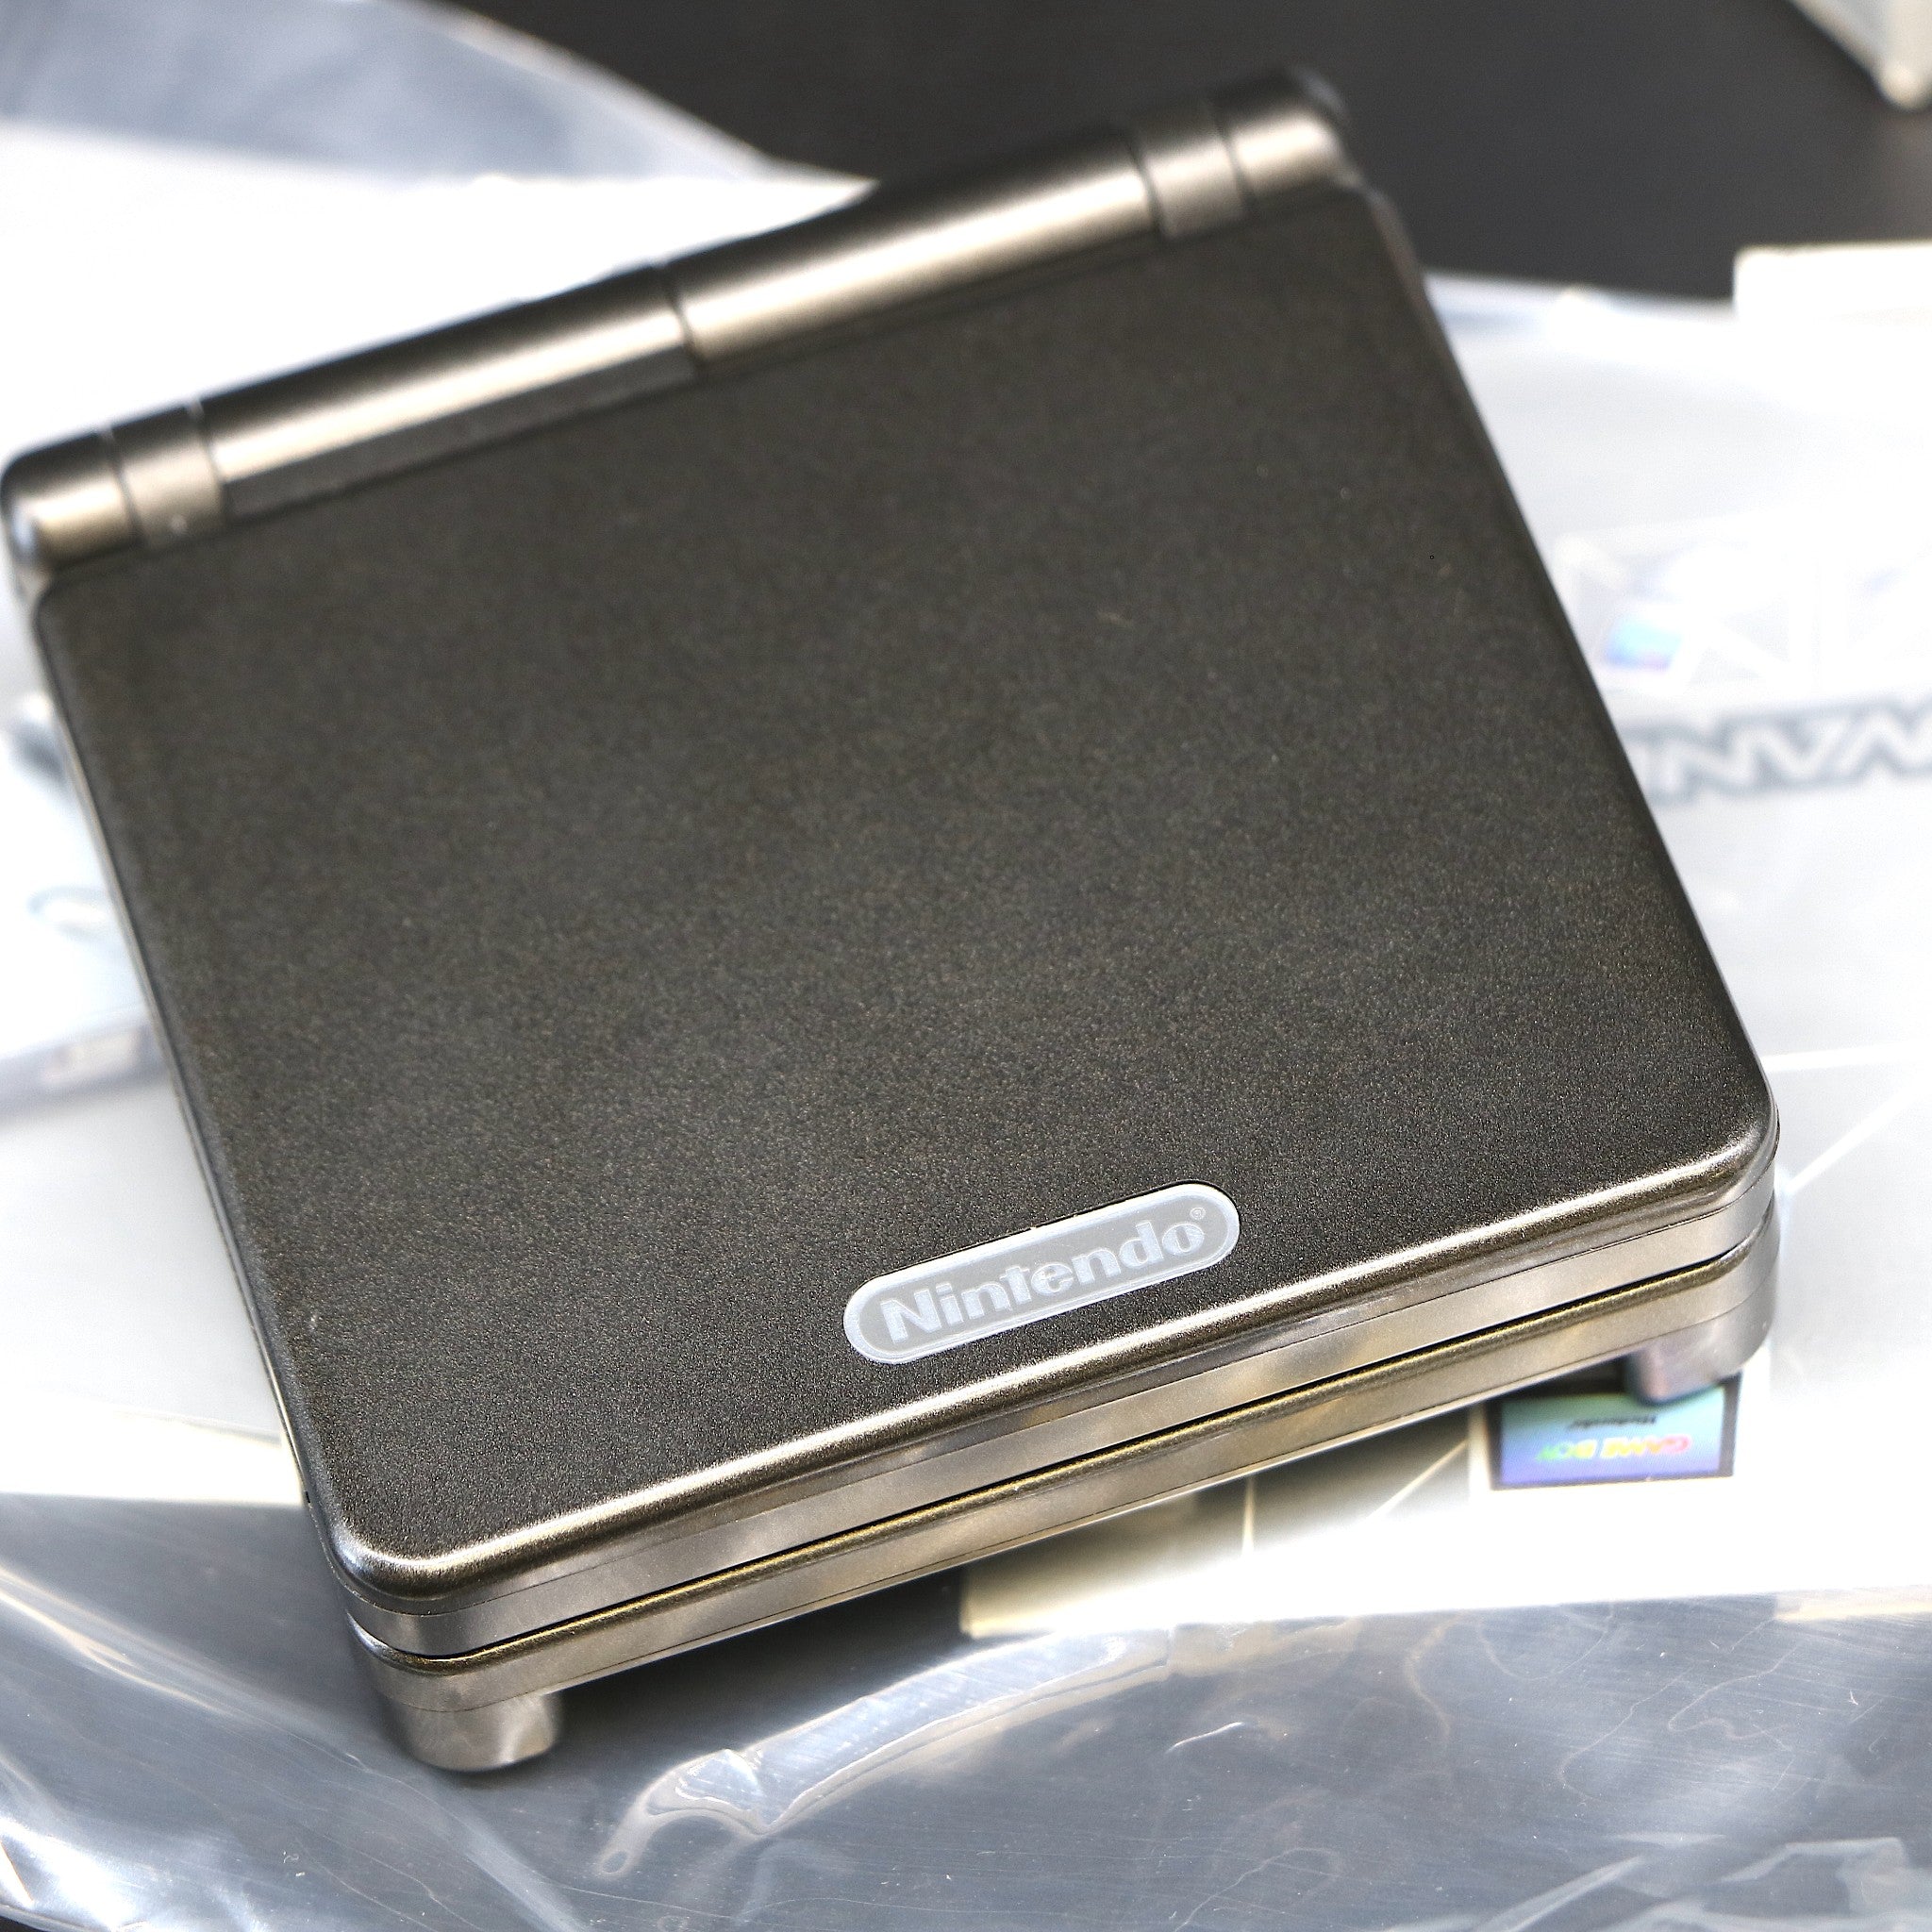 Black Nintendo Gameboy SP Advance | Portable Handheld Console | Mint & Boxed